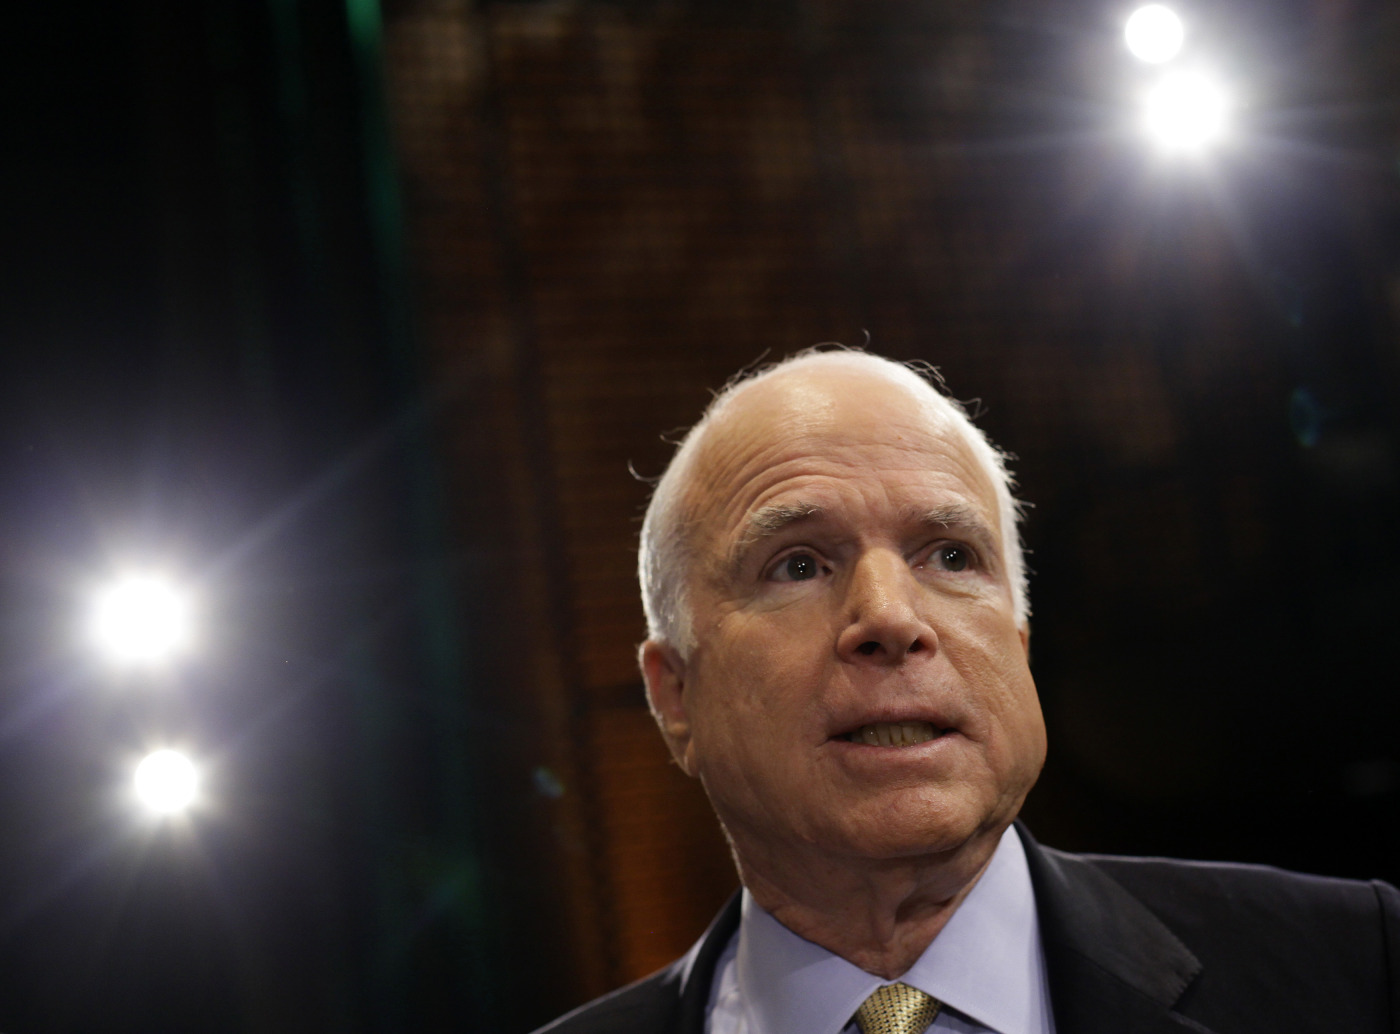 U.S. Senator John McCain (R-AZ) at a town hall event in Mesa, Arizona August 27, 2013. (Joshua Lott&mdash;Reuters)